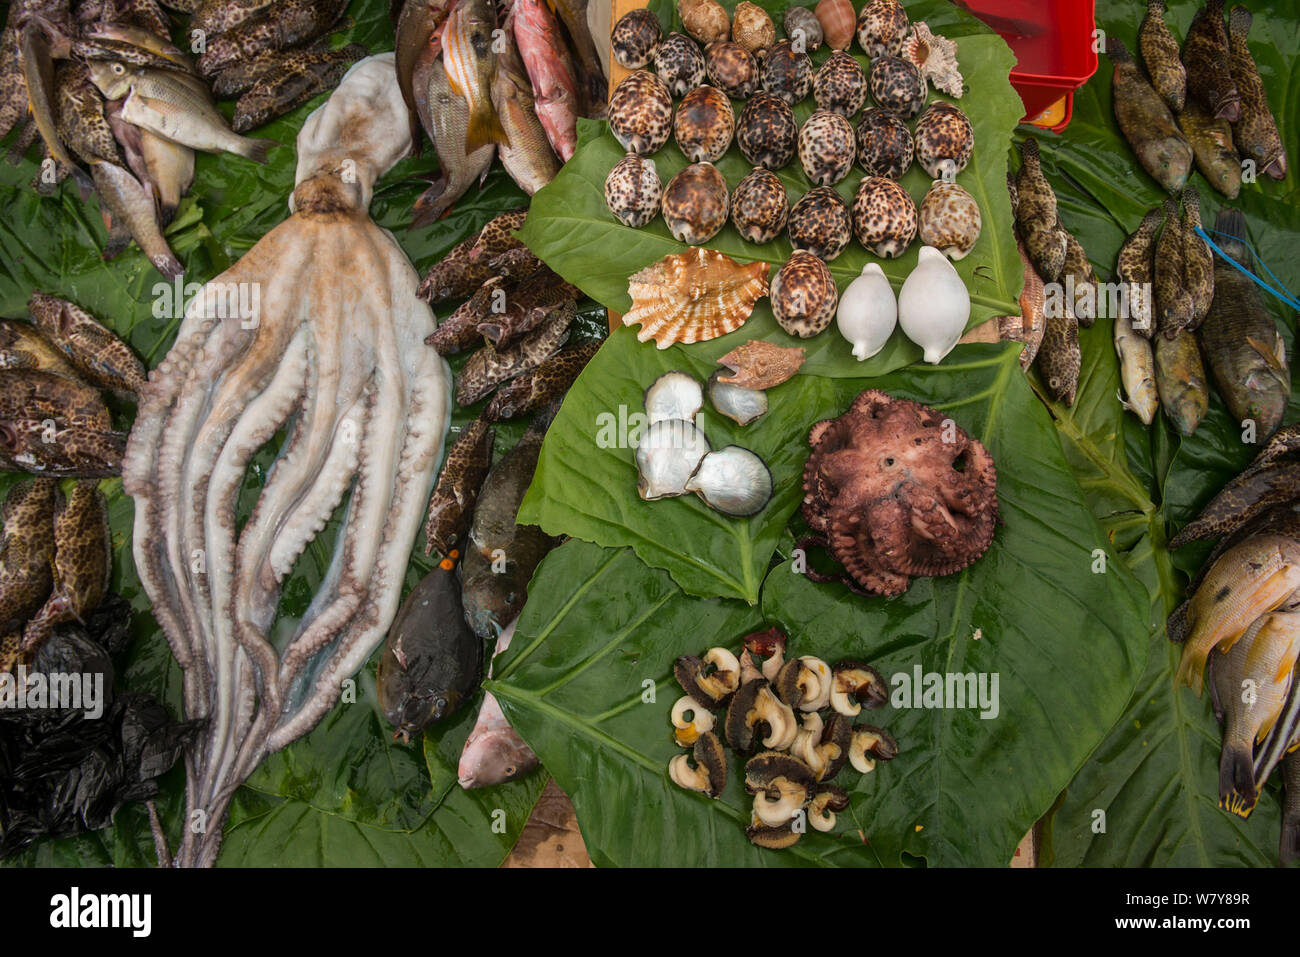 Mixed reef fish, shellfish and octopus for sale, Suva Seafood Market, Viti Levu, Fiji, South Pacific, April 2014. Stock Photo